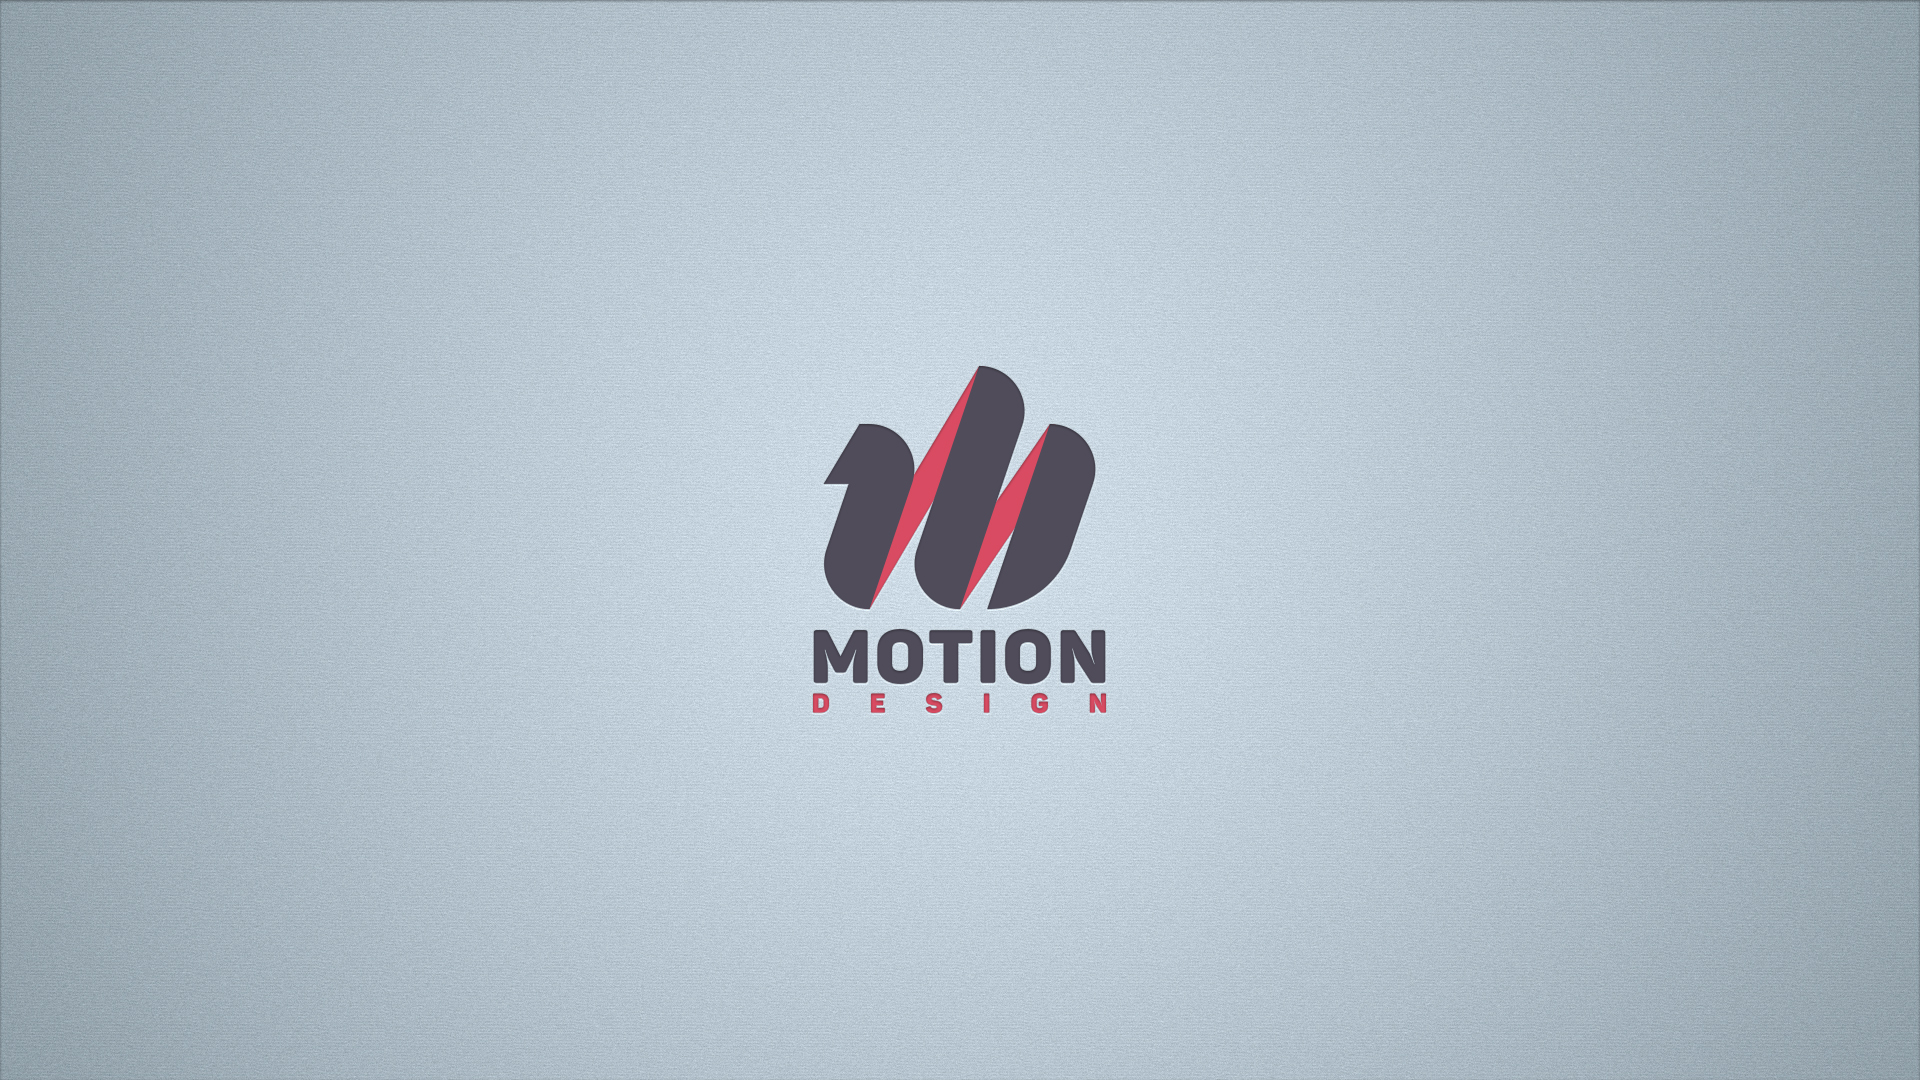 Motion Design logo